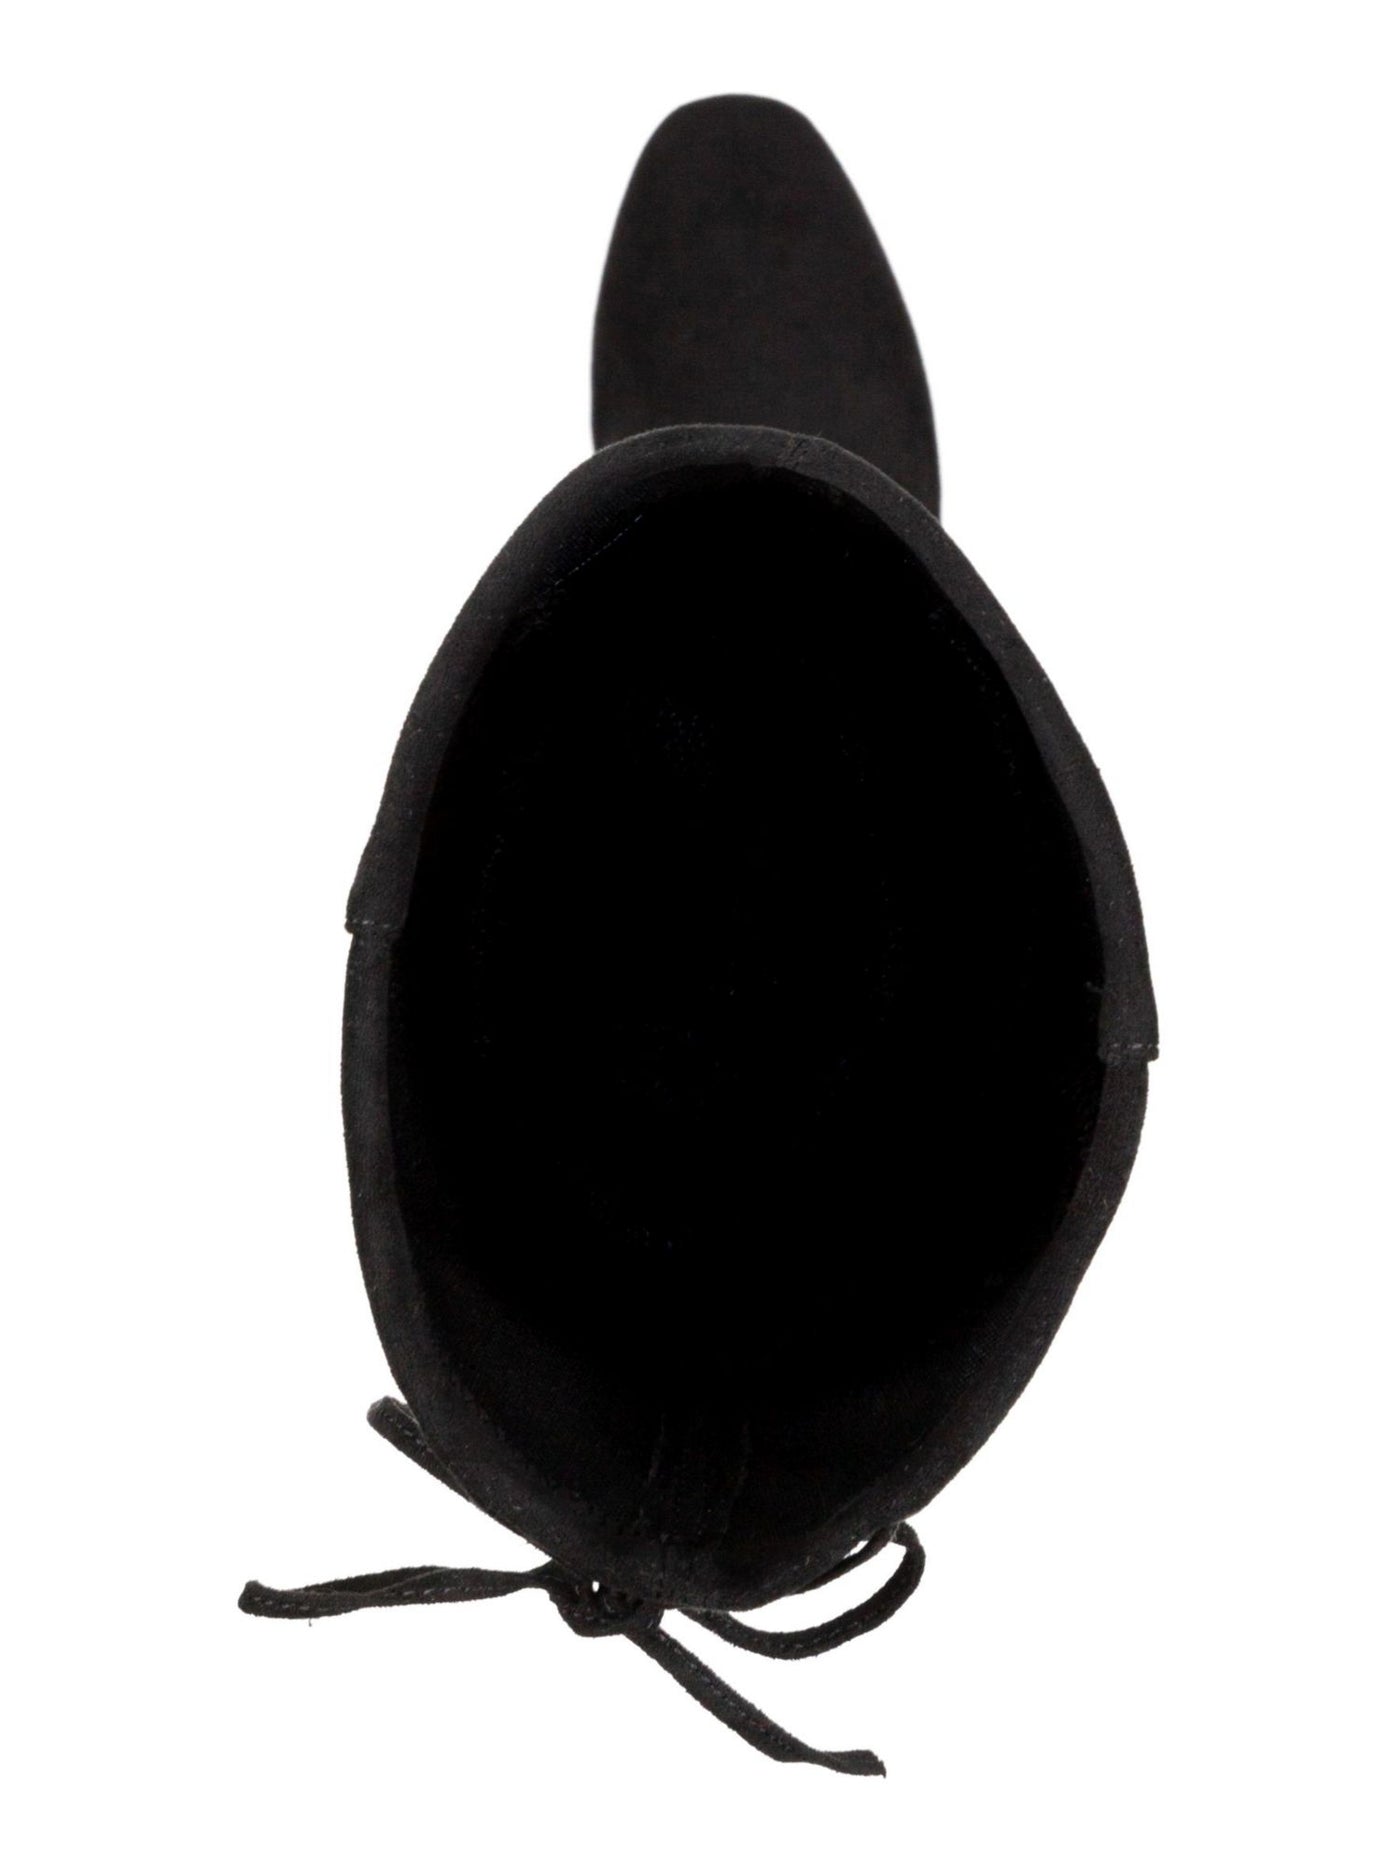 SUGAR Womens Black Zipper Accent Lace Ollie Almond Toe Dress Boots Shoes 6 M